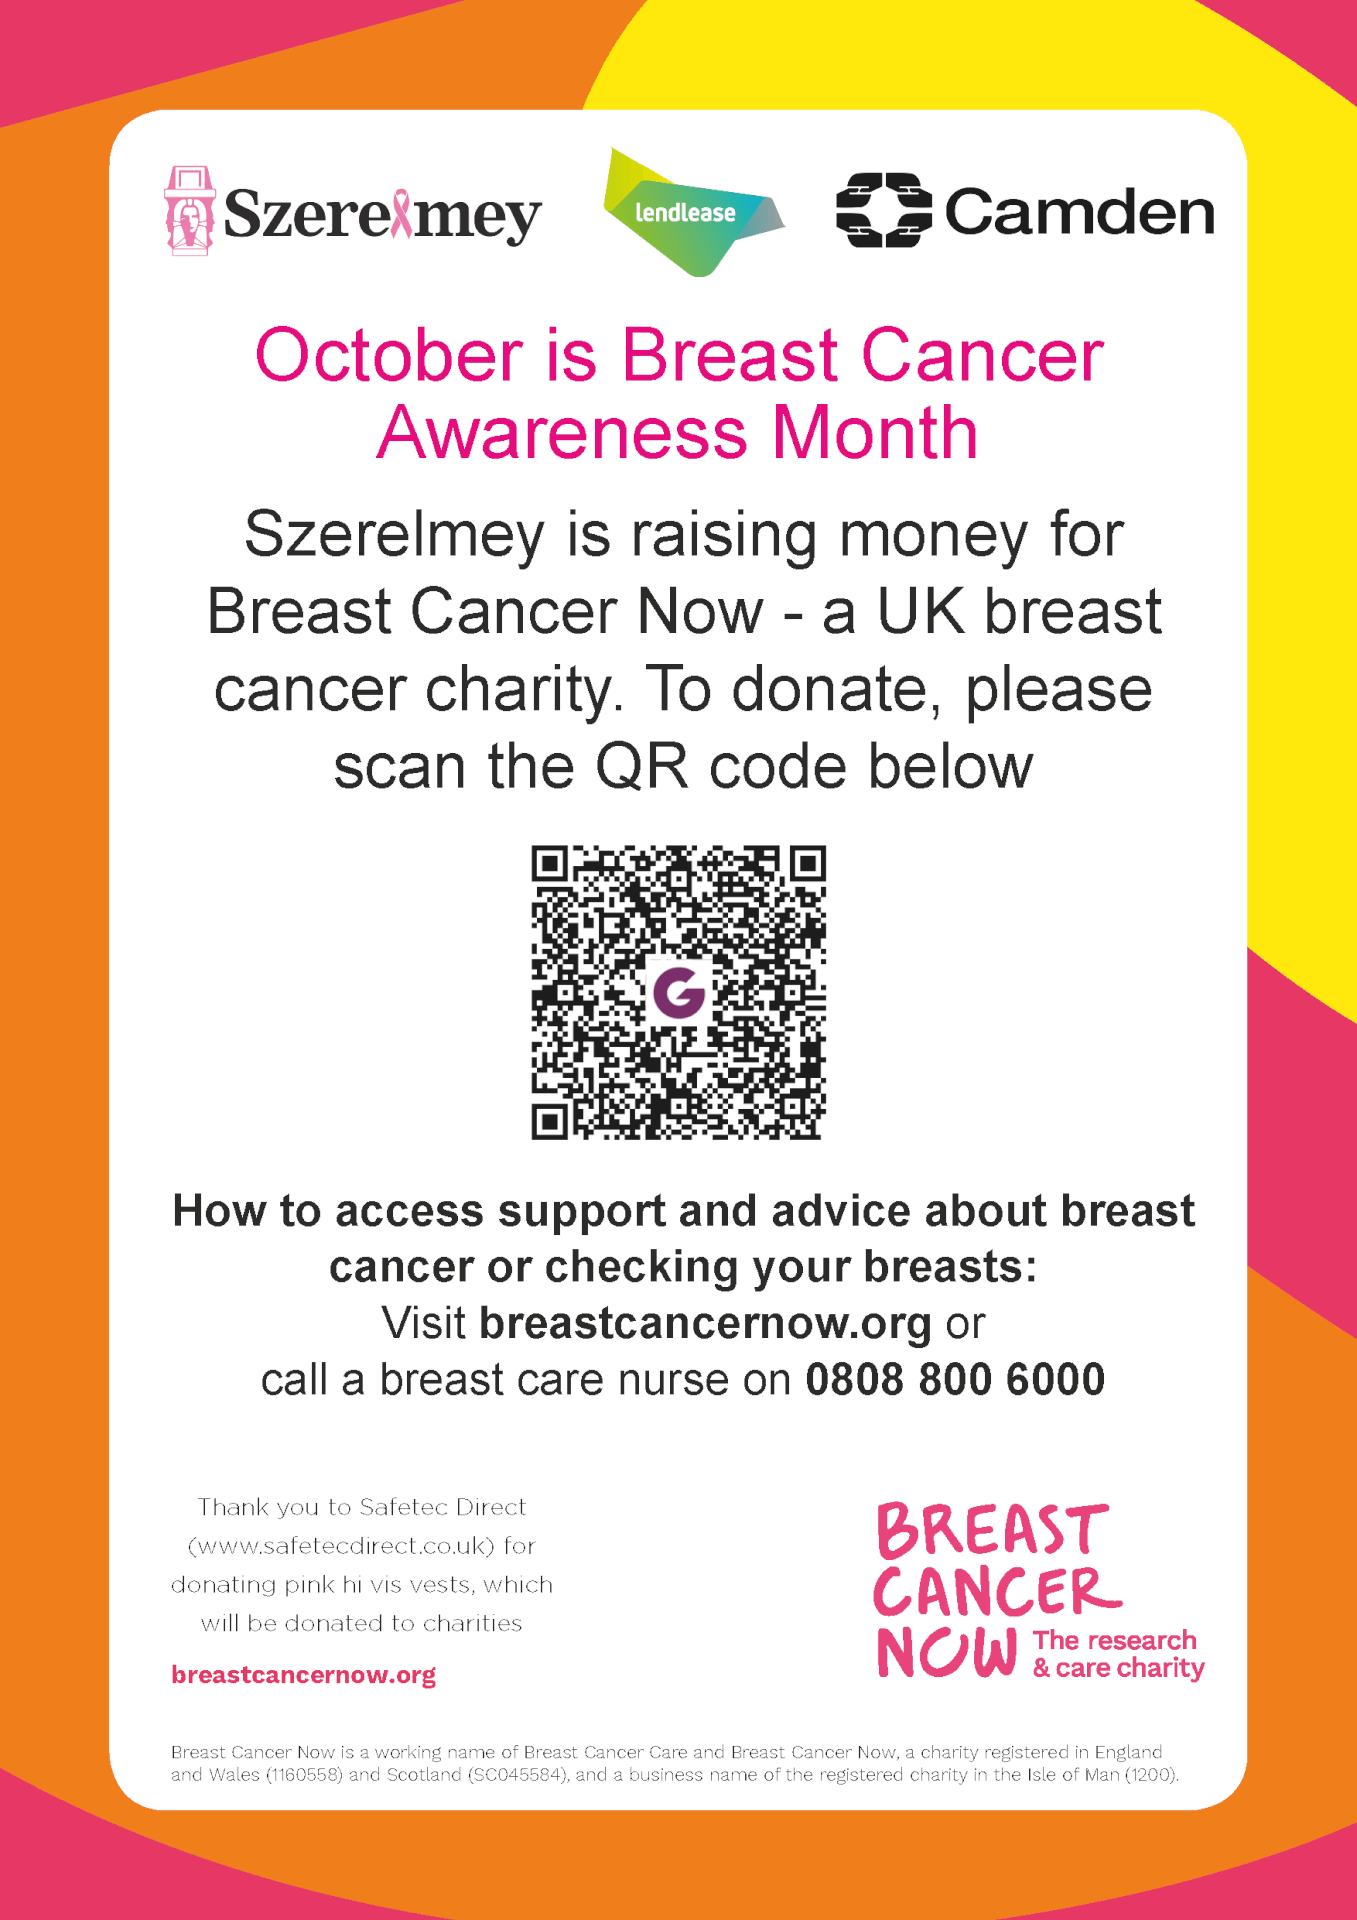 Szerelmey is raising money for Breast Cancer Now – a UK breast cancer charity - Szerelmey